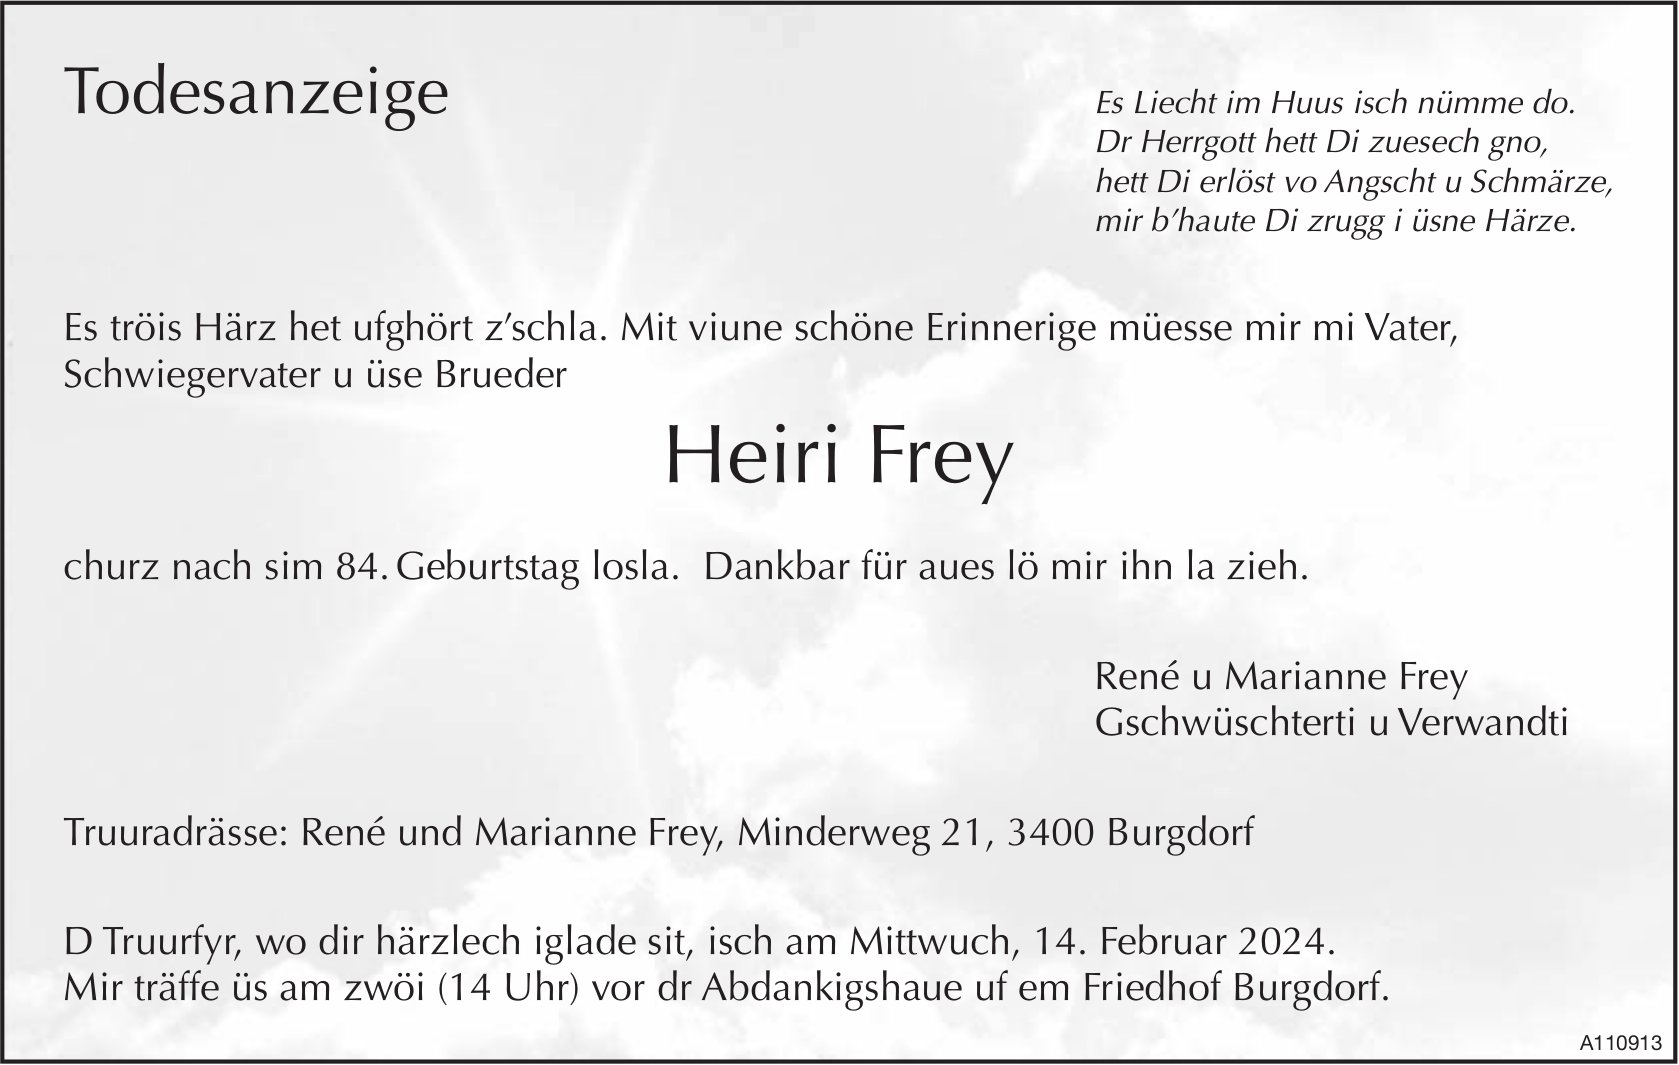 Heiri Frey, Februar 2024 / TA